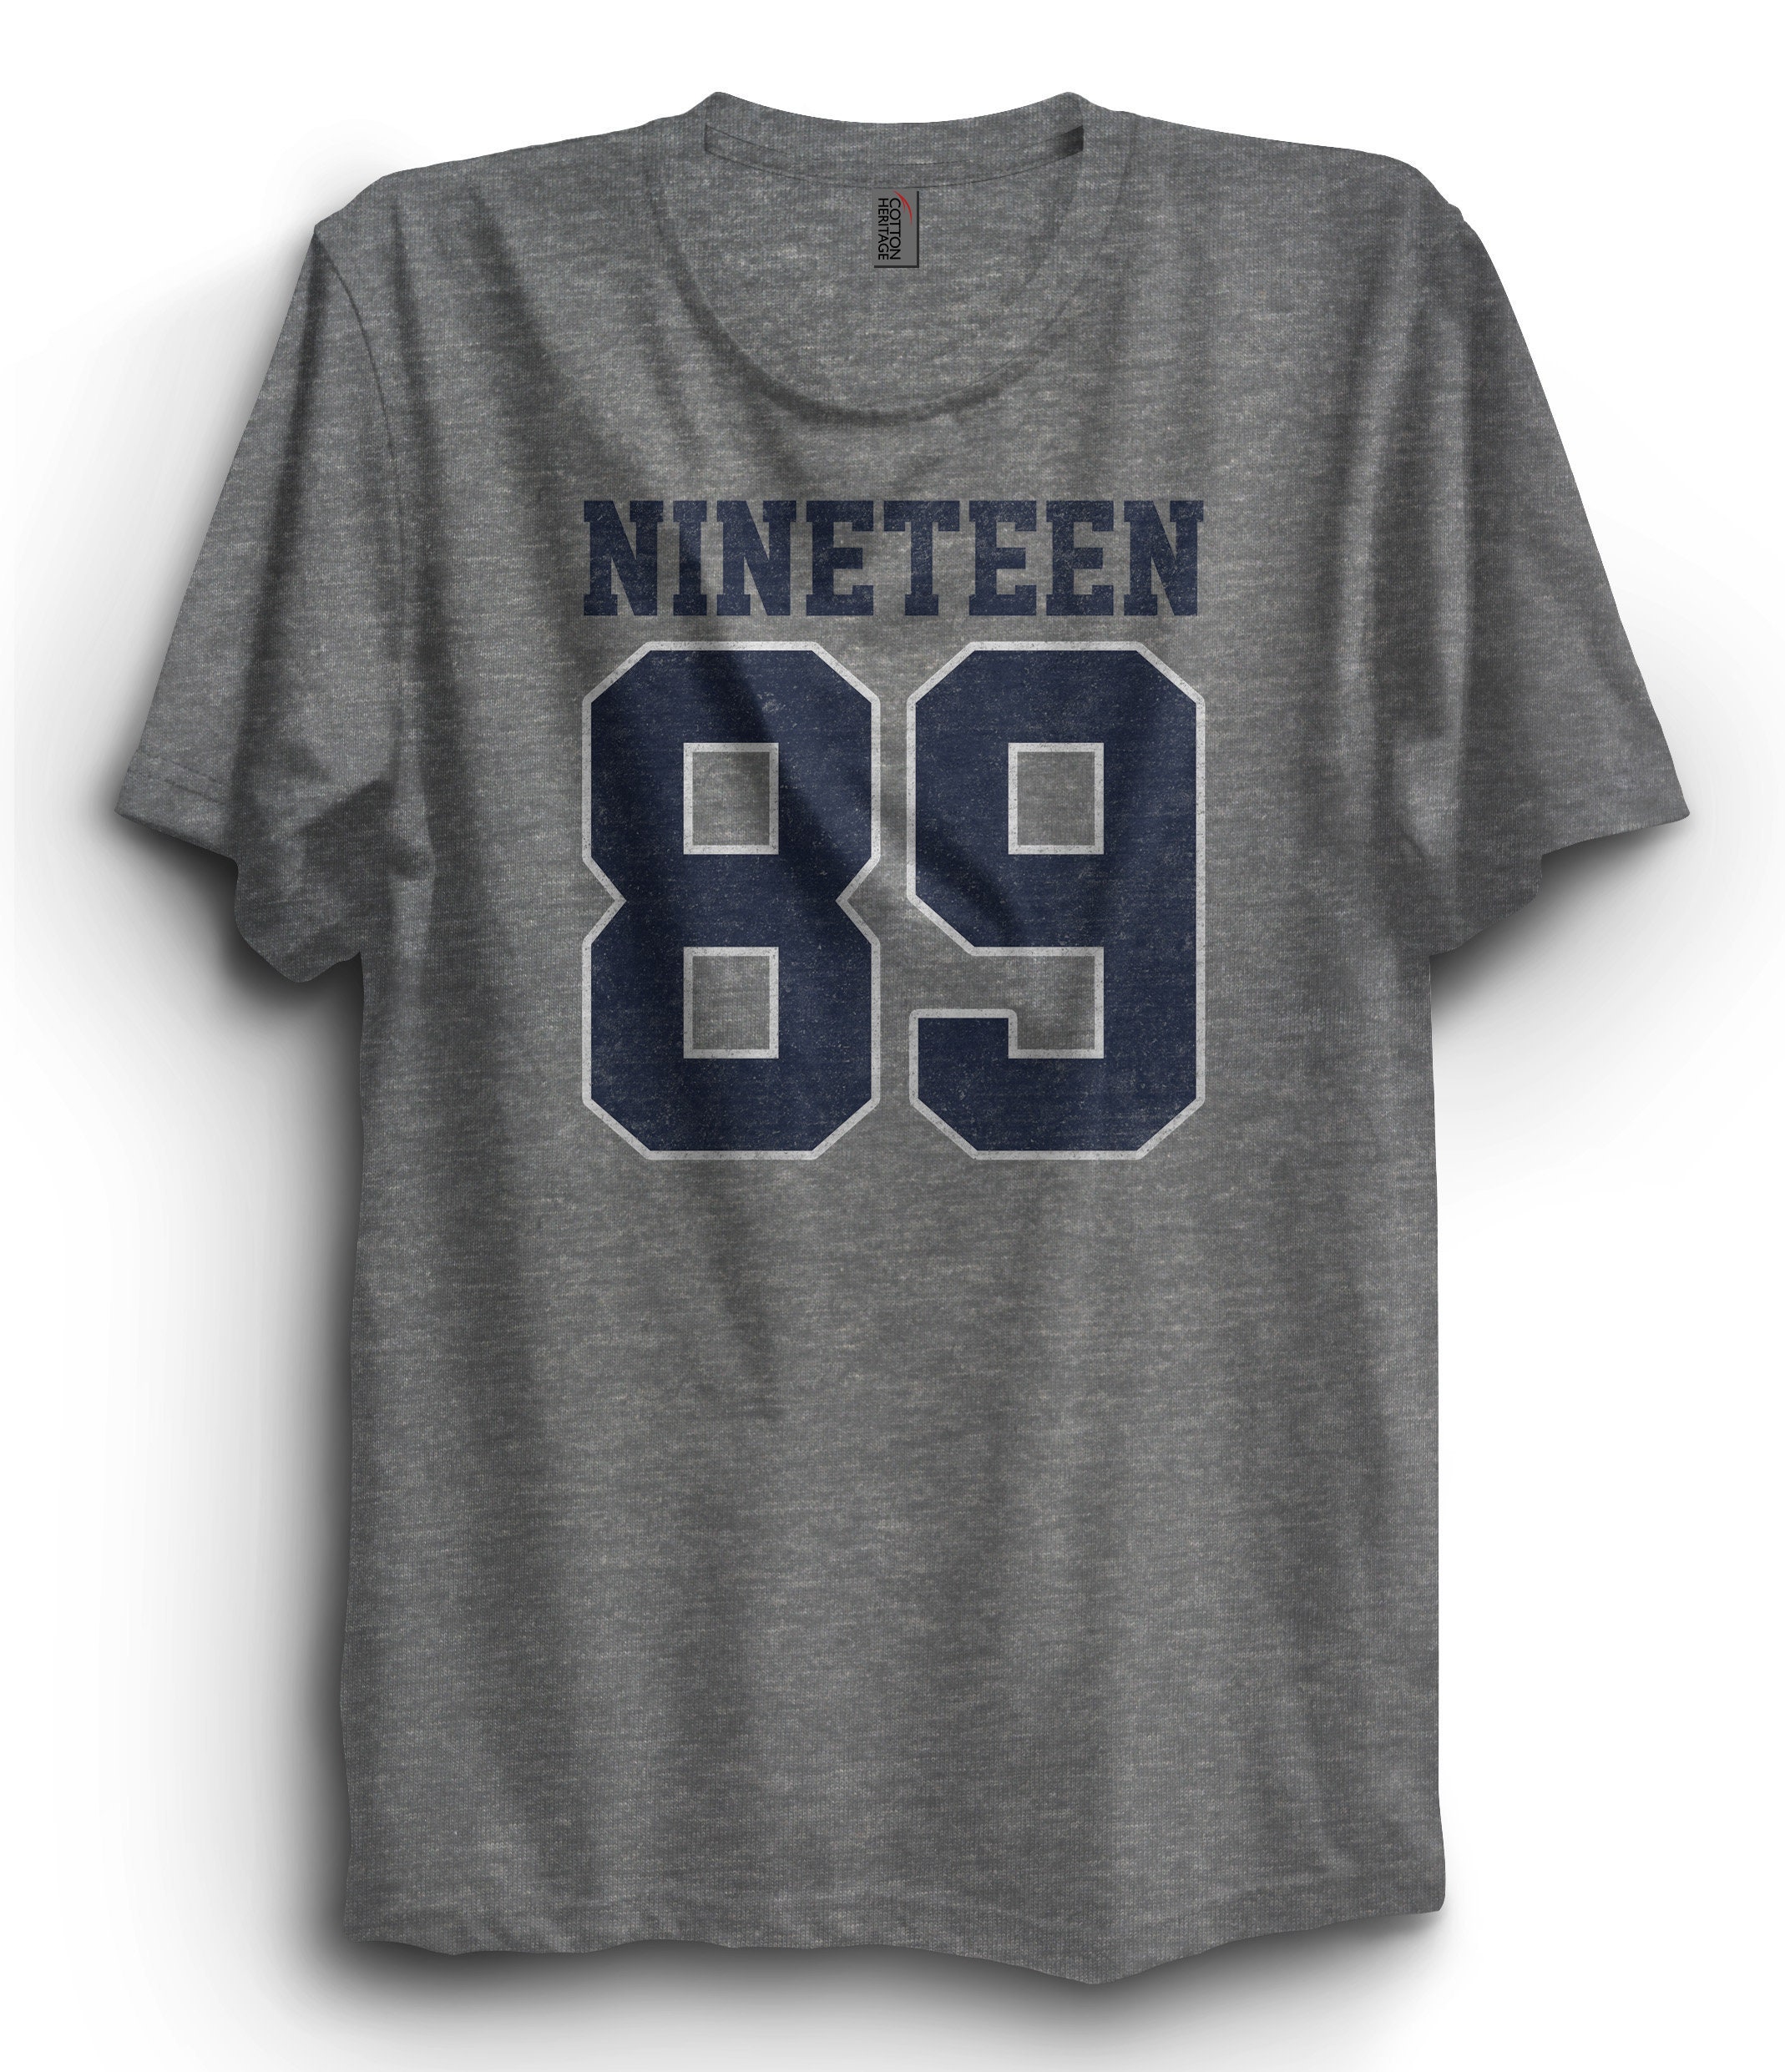 1989 T-shirt, Nineteen 89 Tshirt, Premium Ringspun Shirt, Birthday